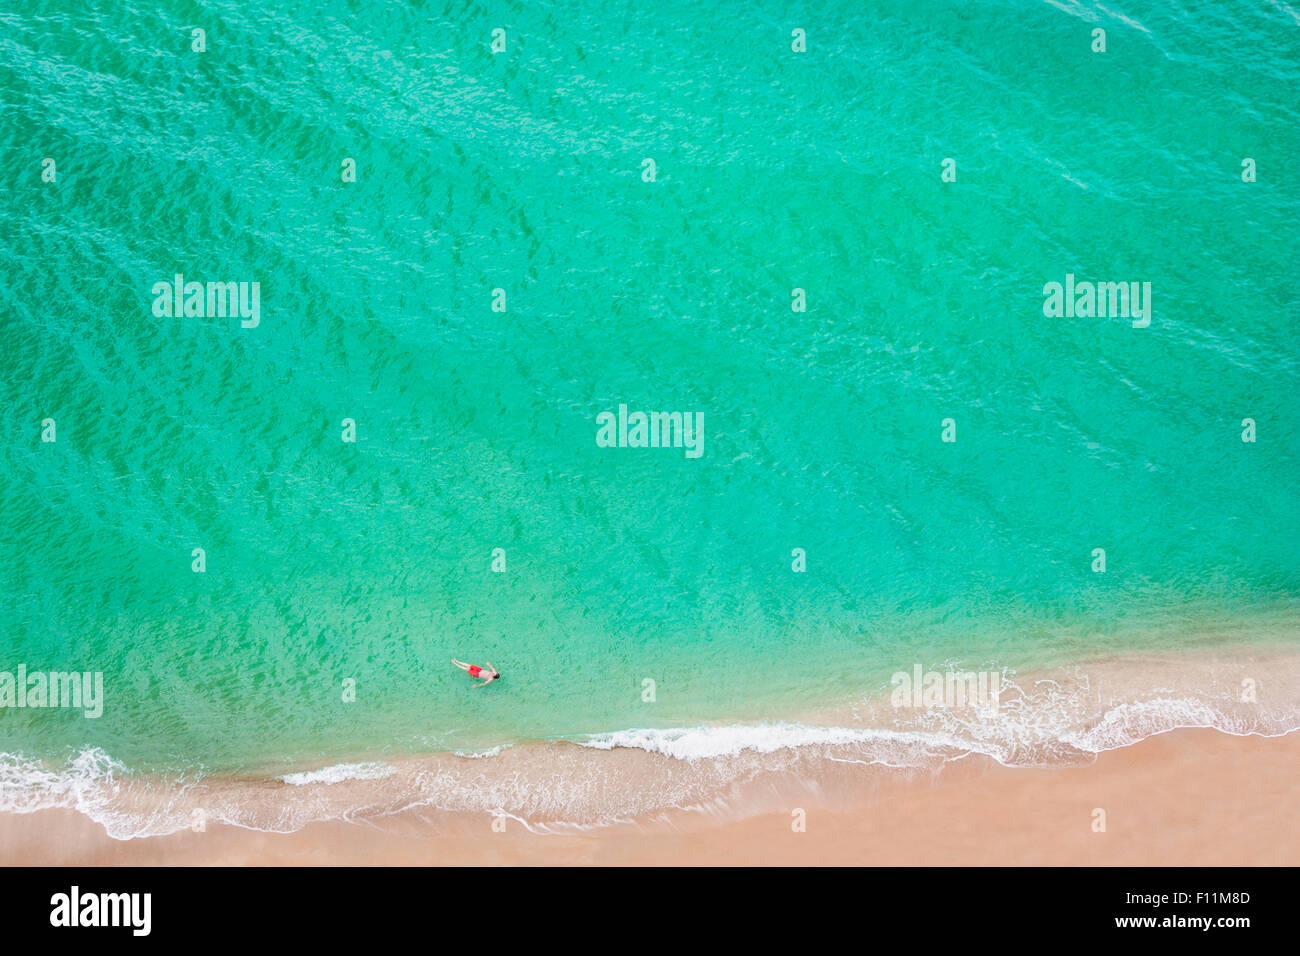 Aerial view of Caucasian man swimming in ocean on beach Stock Photo